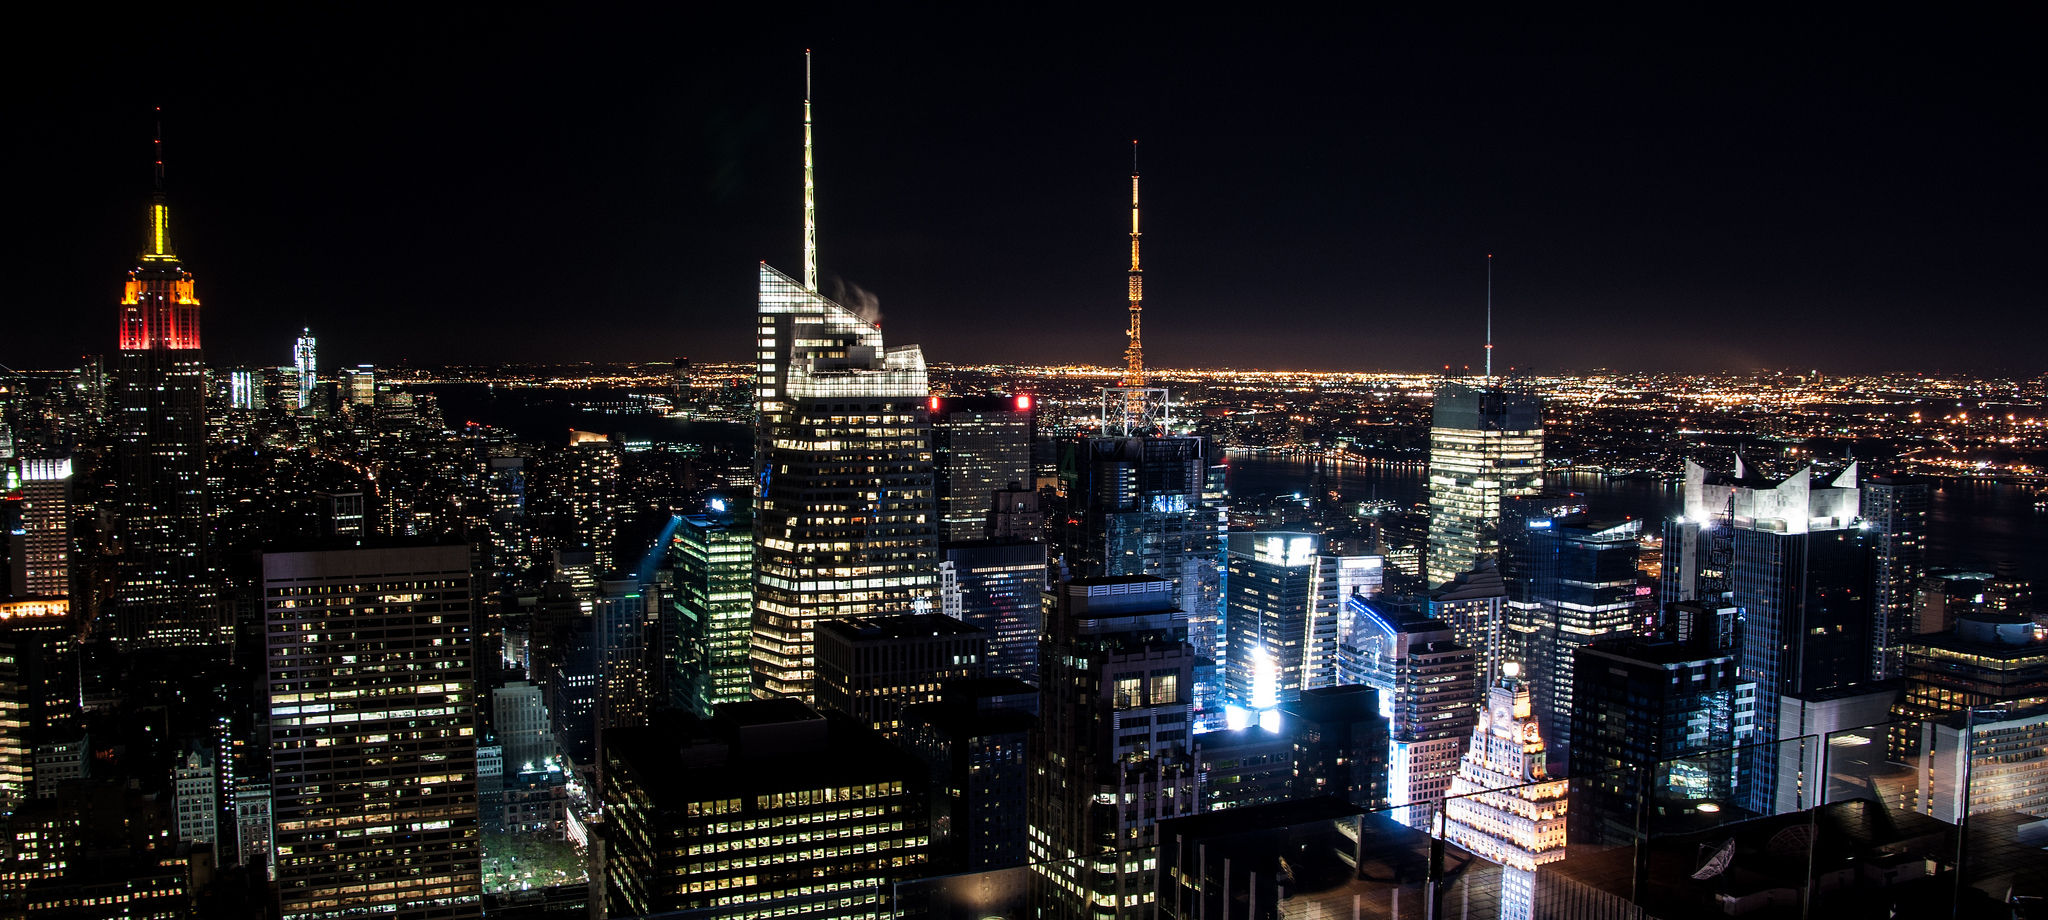 NYC night view by Iván Lara vía Flickr